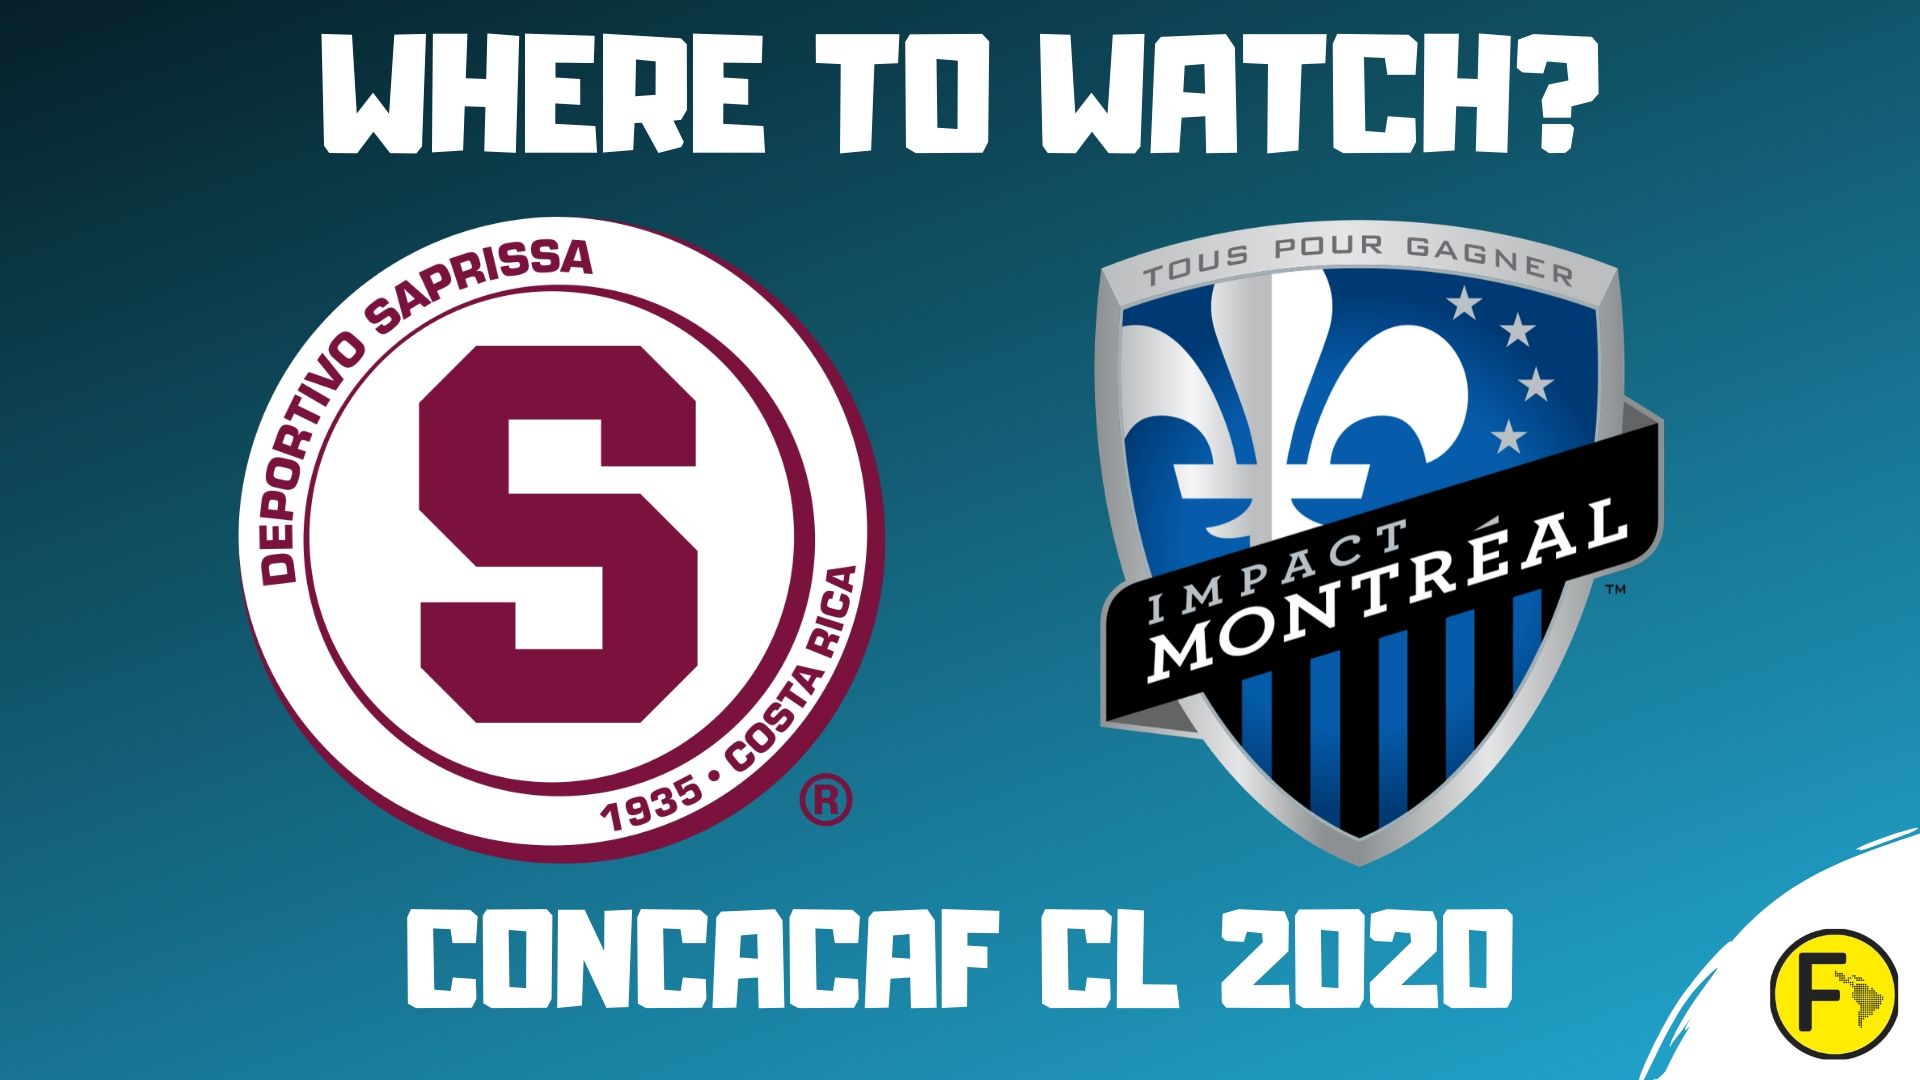 Saprissa vs Montreal Impact 2020